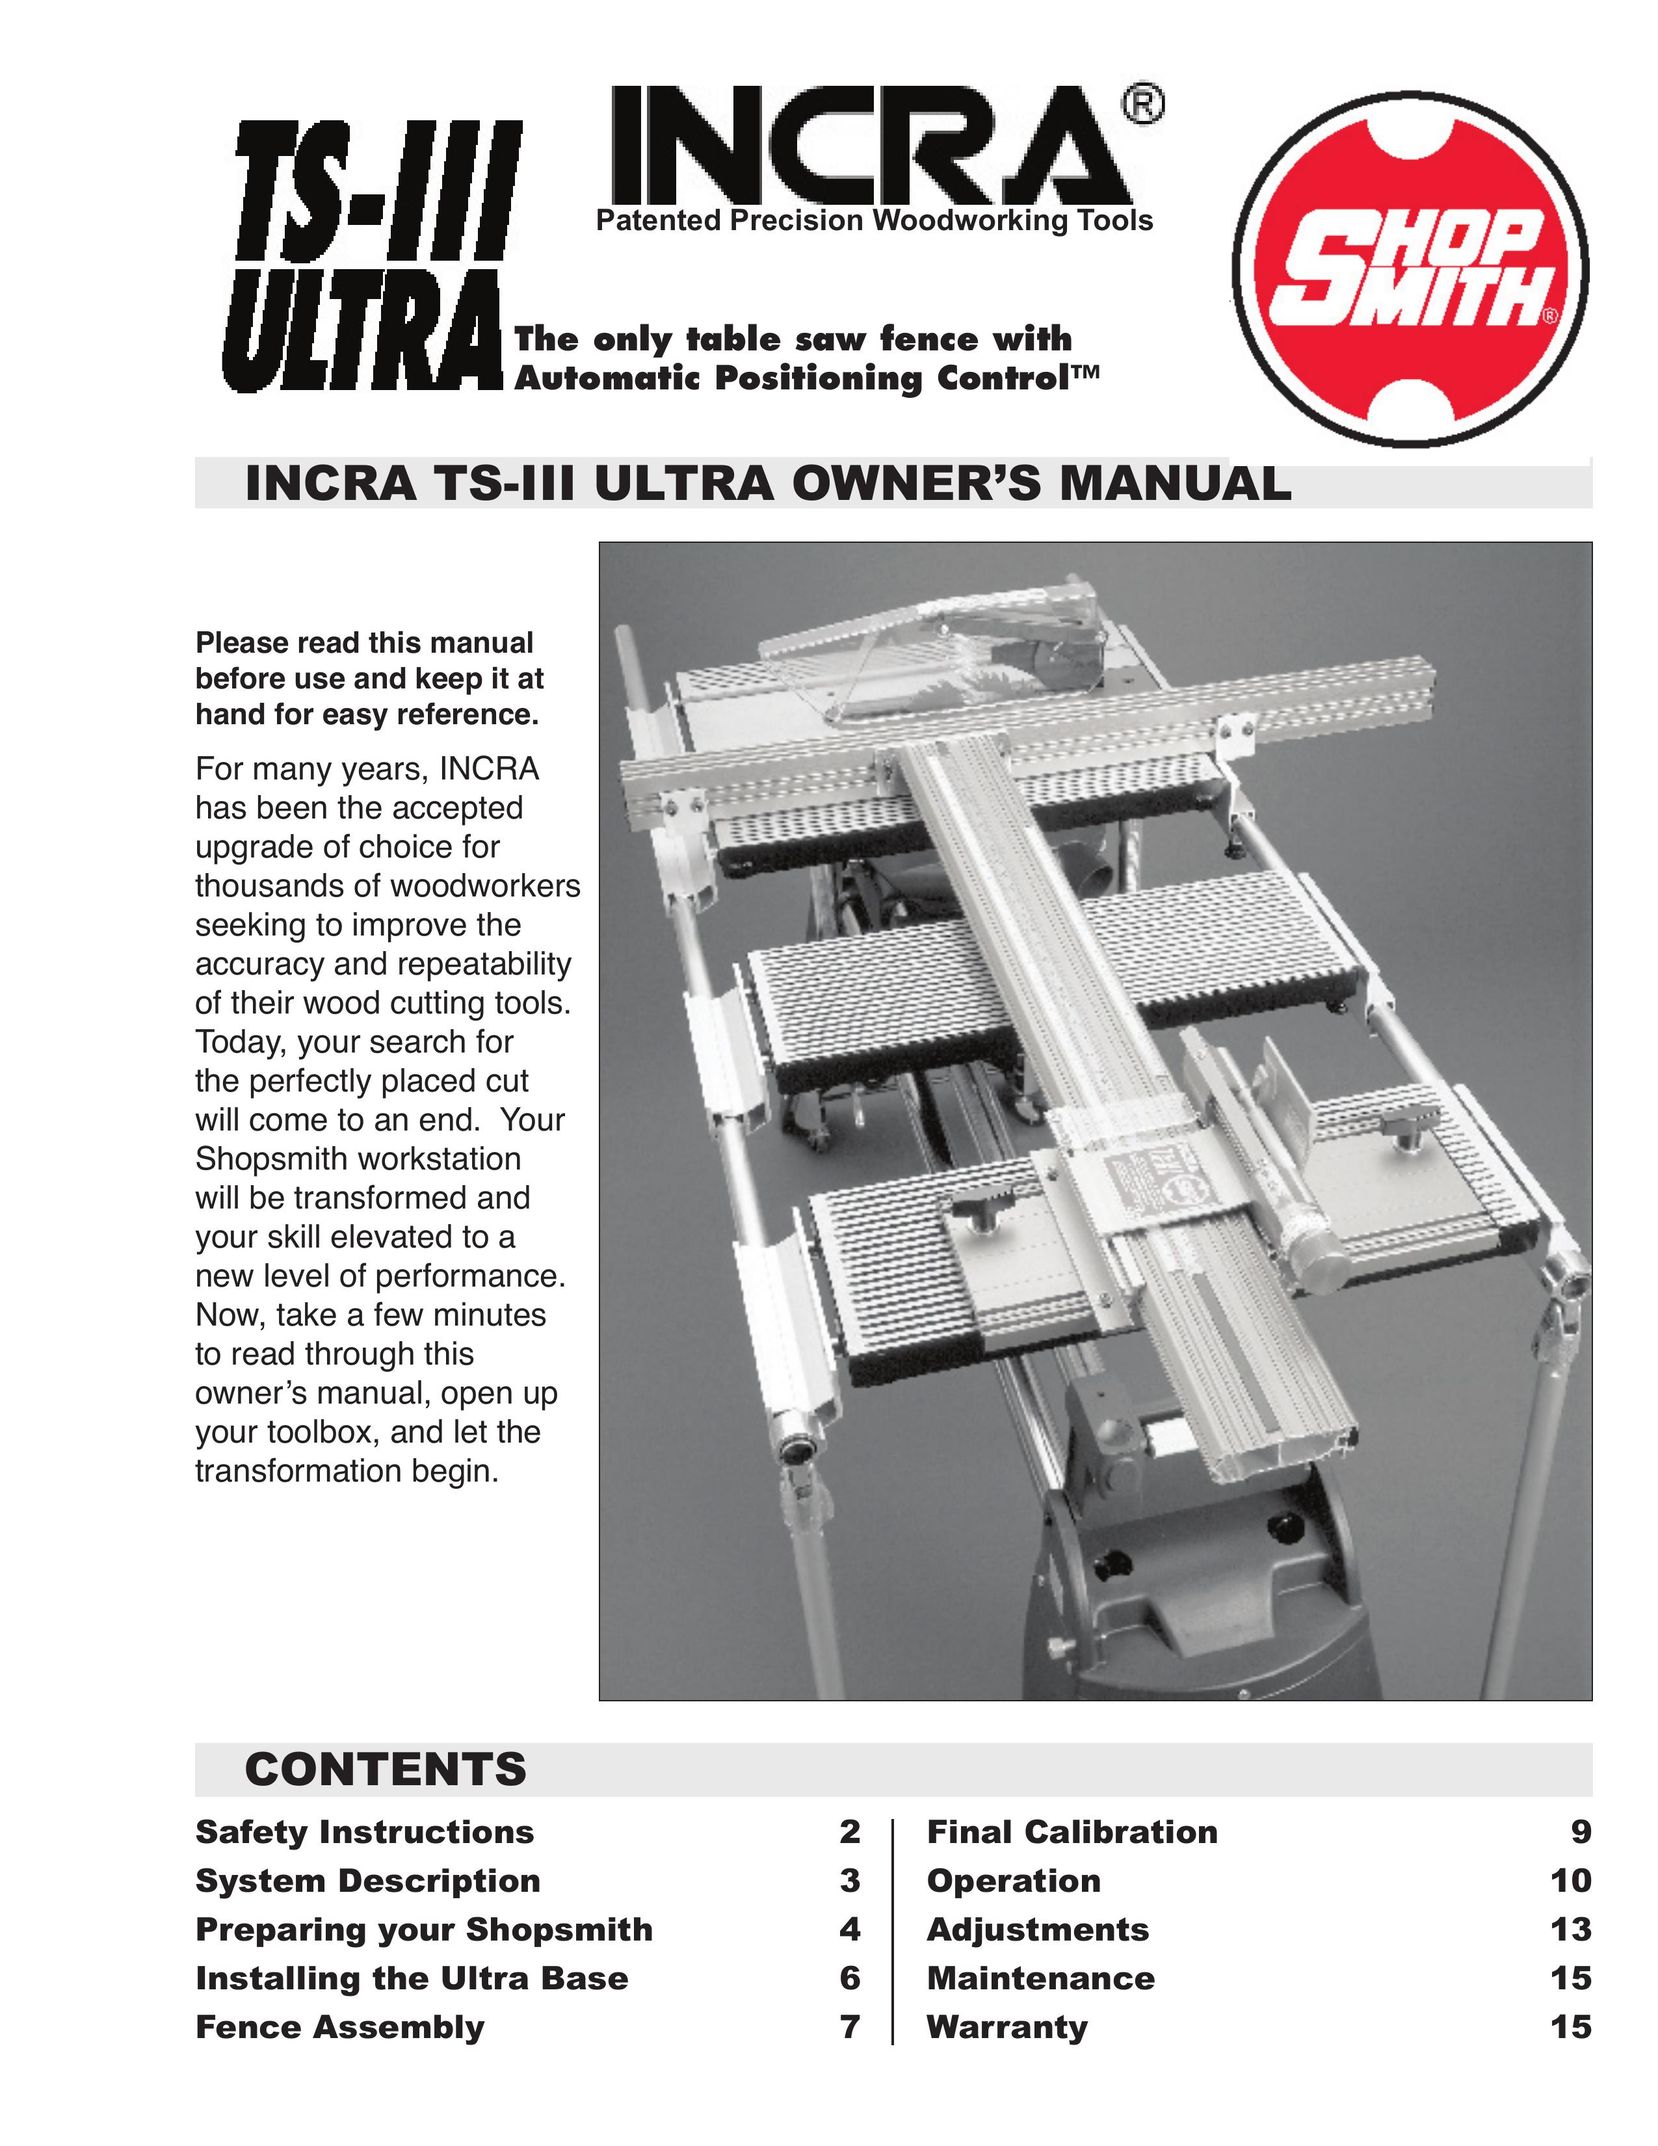 Shopsmith TS-III ULTRA Saw User Manual